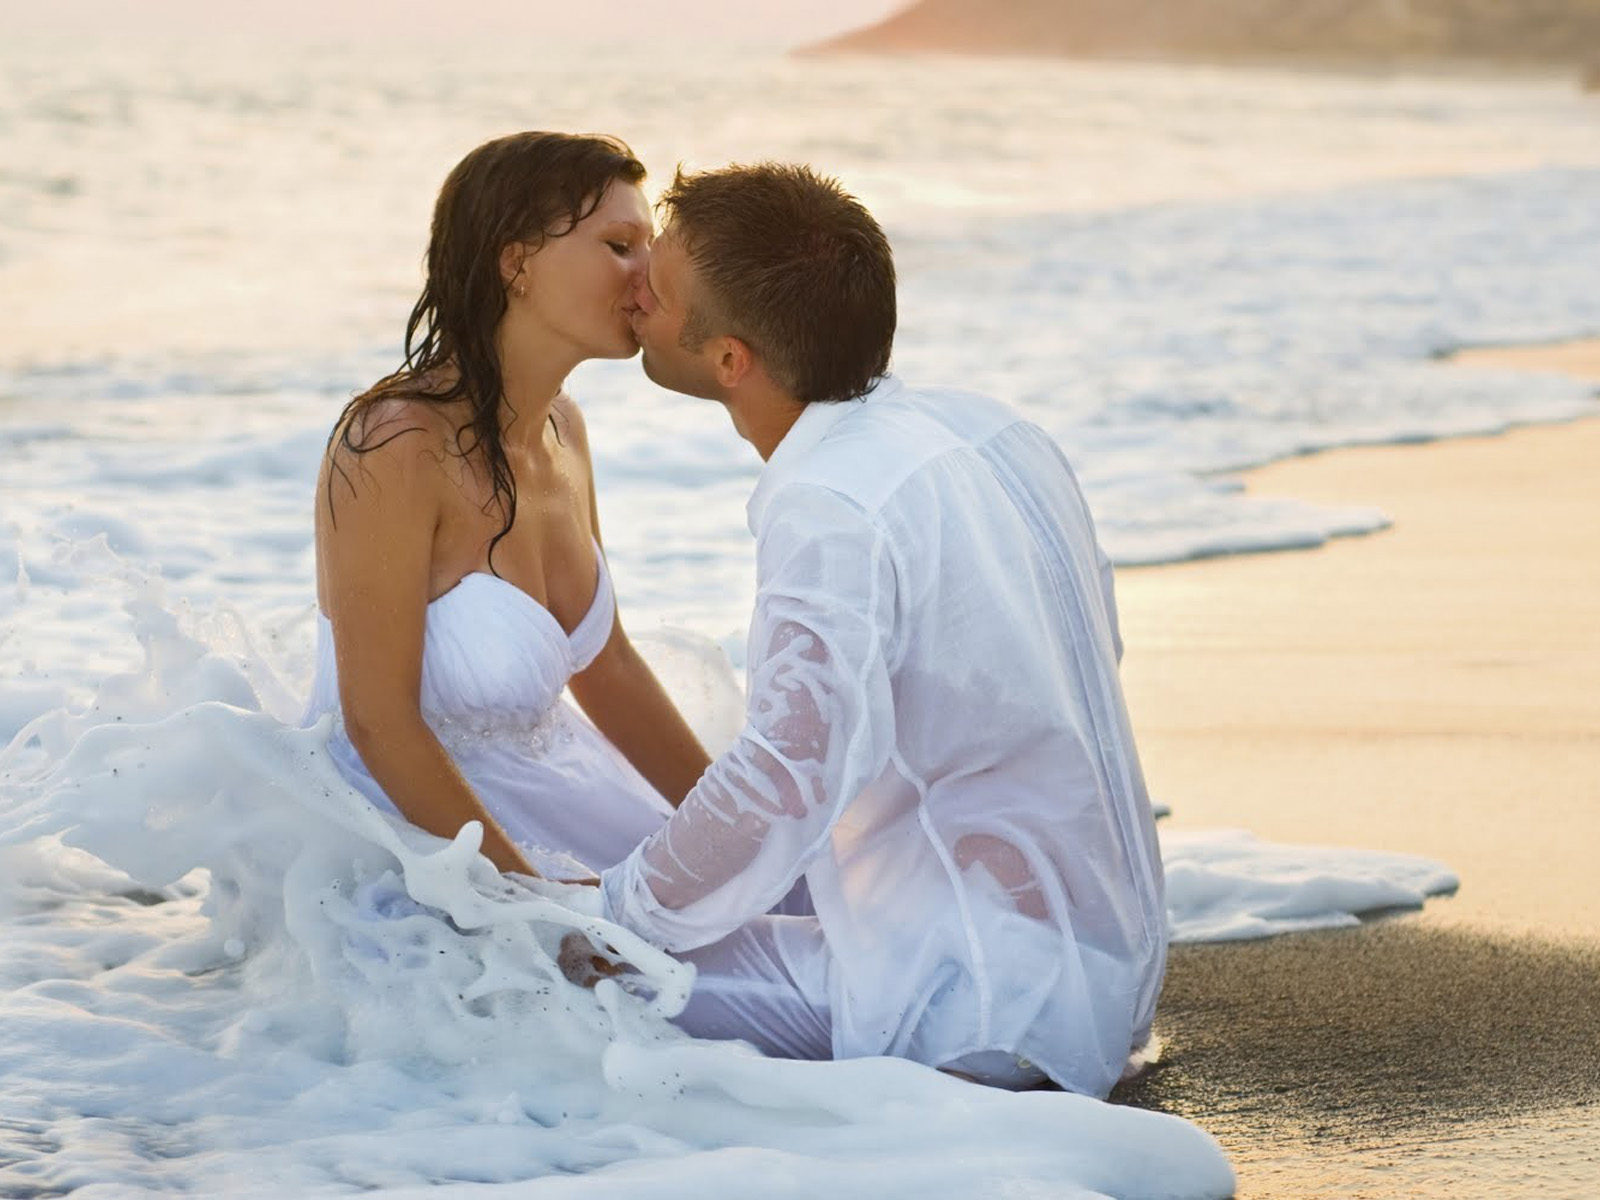 Love wedding romance couple of beach kiss photos love couple wallpaper hd x